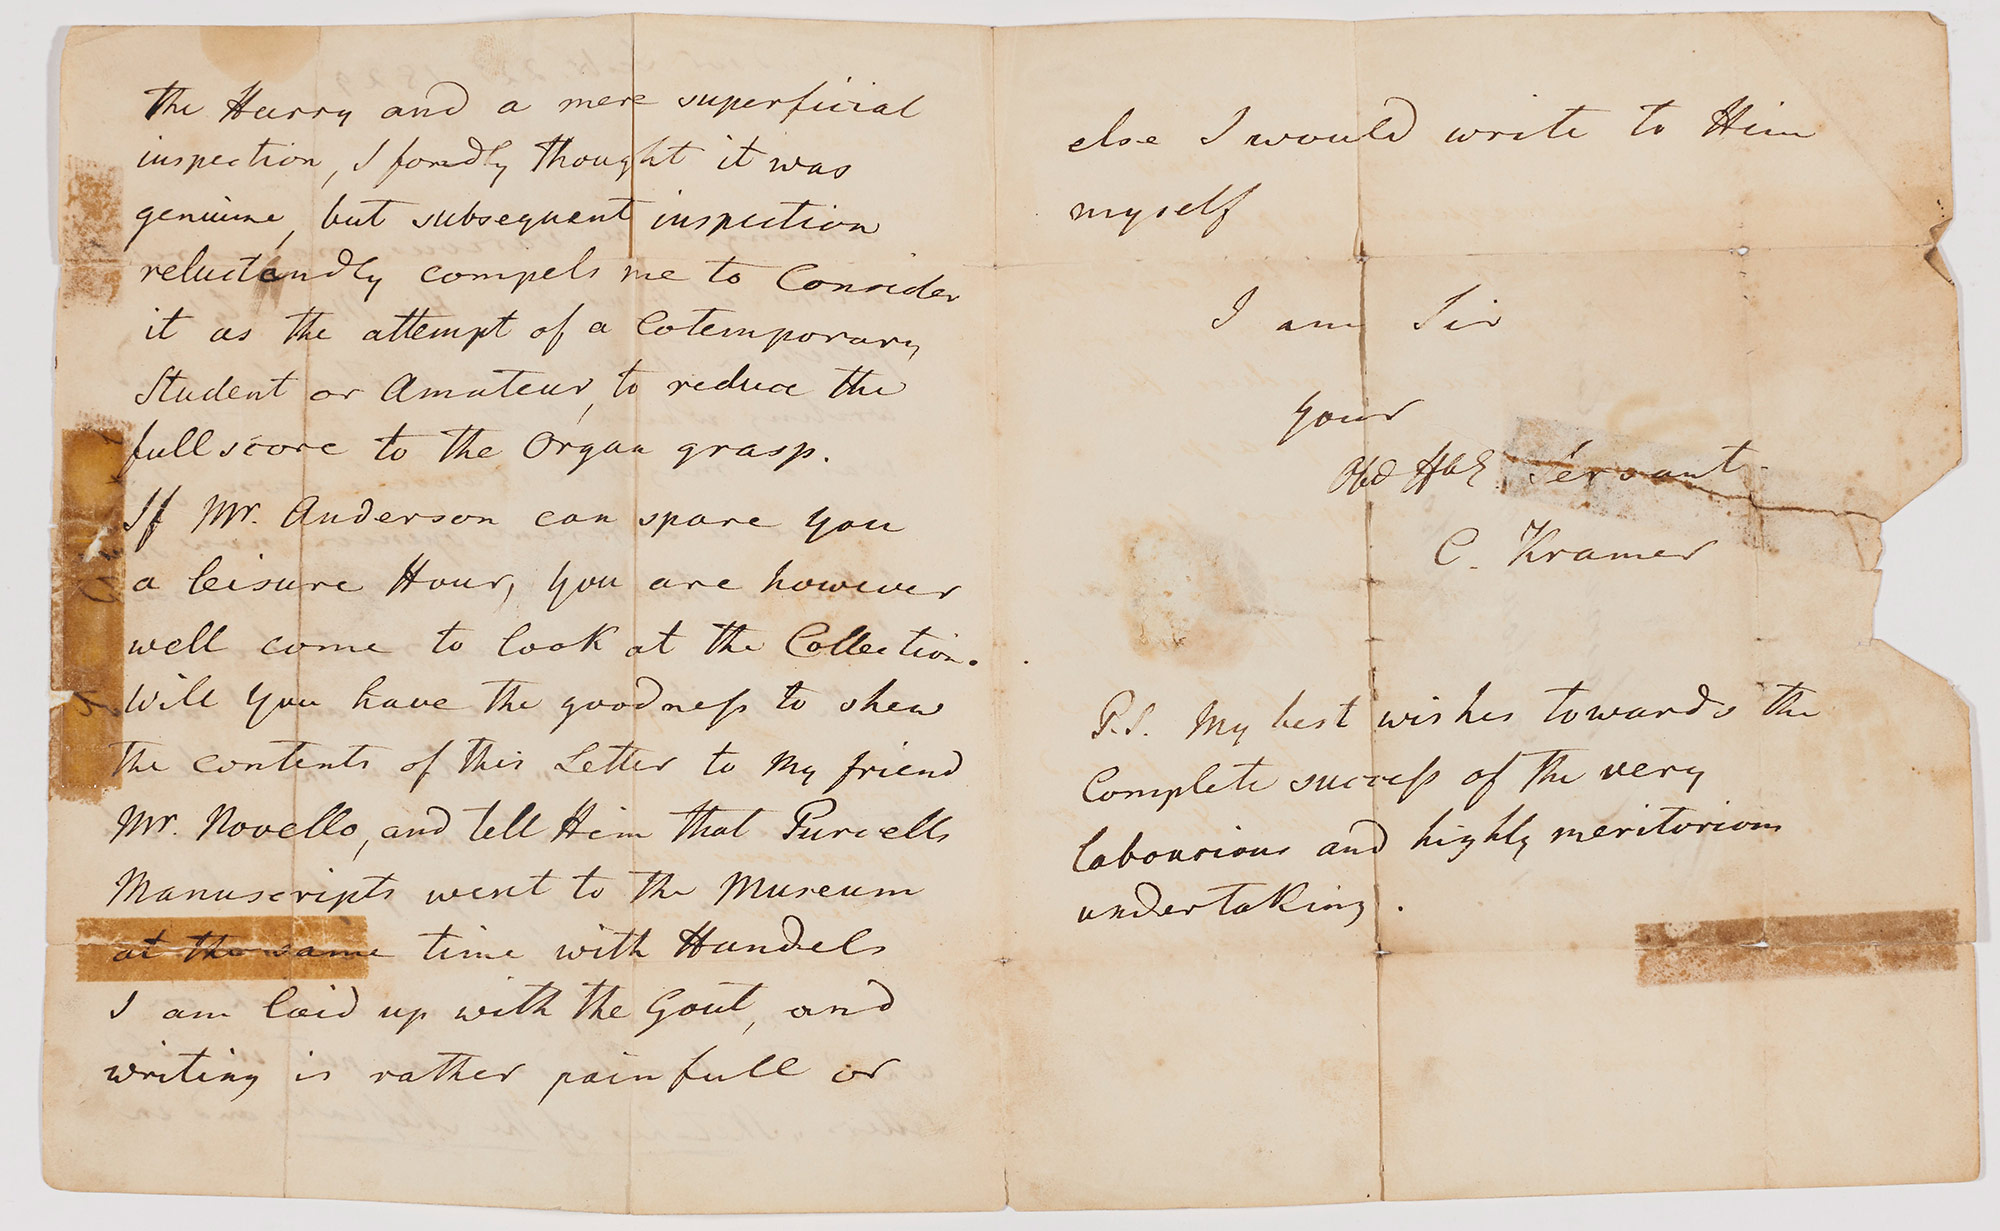 A letter from Christian Kramer (d.1834) addressed to C. Hamilton, of 19 Wardour Street. 